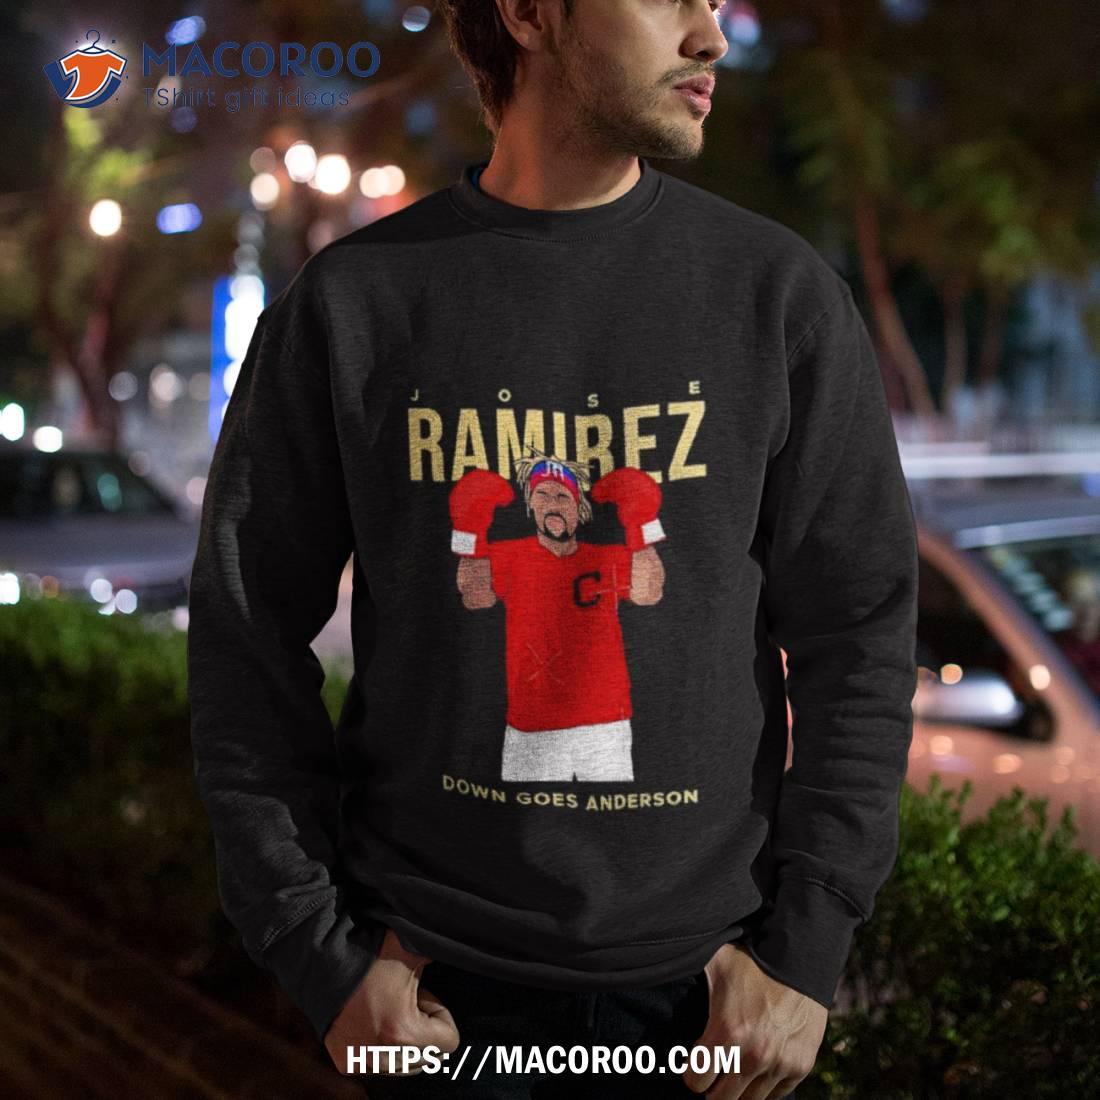 Jose Ramirez T-Shirts for Sale